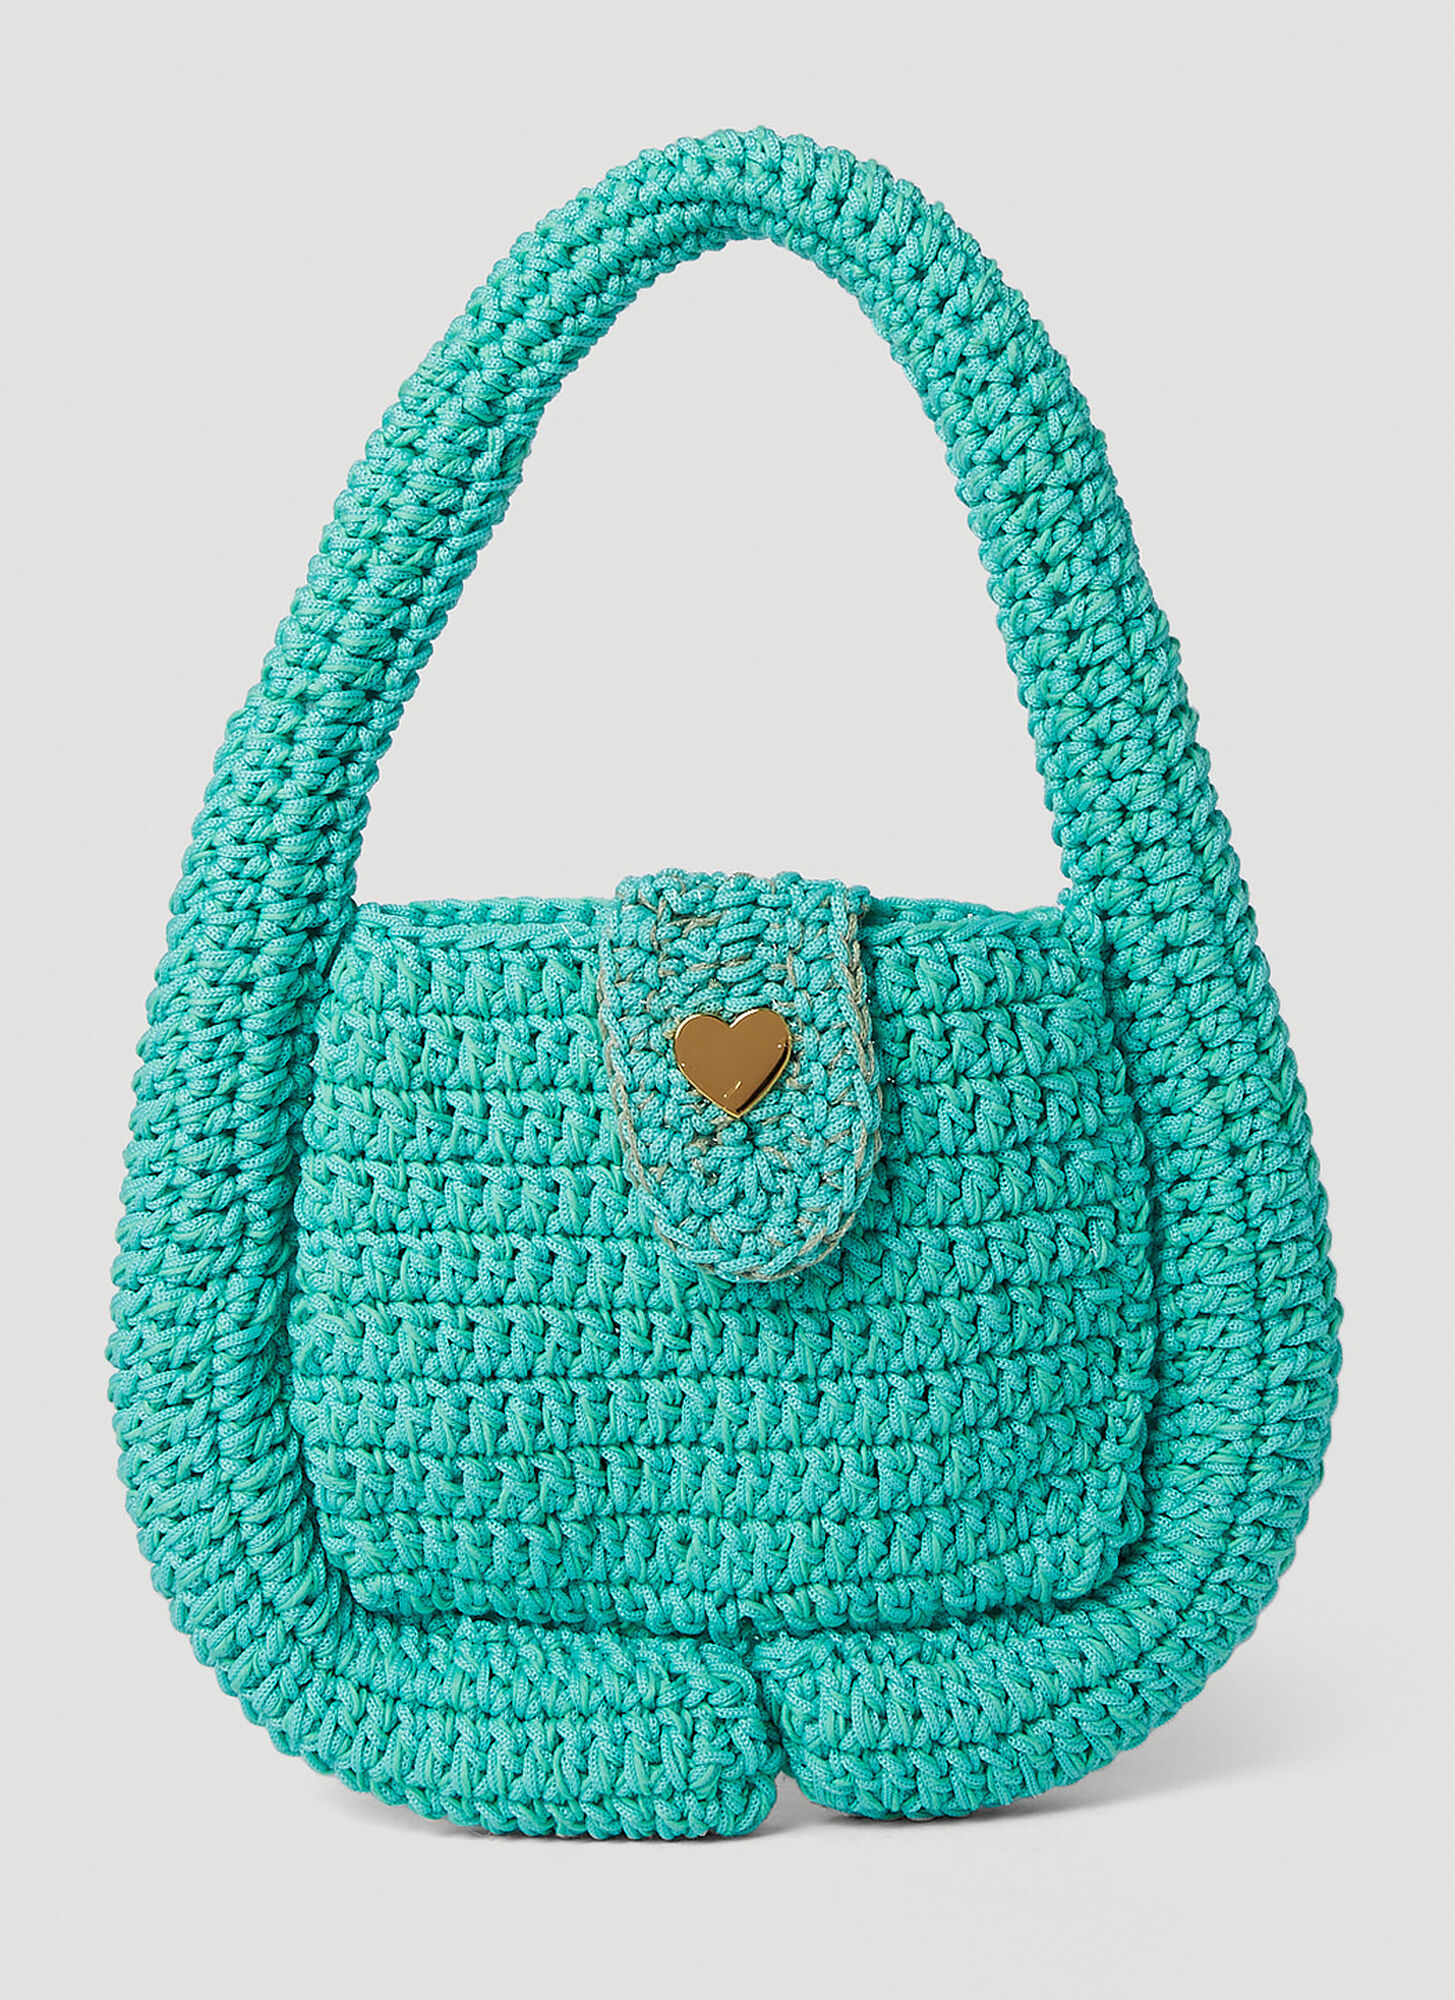 Marco Rambaldi Handmade Crochet Handbag In Green